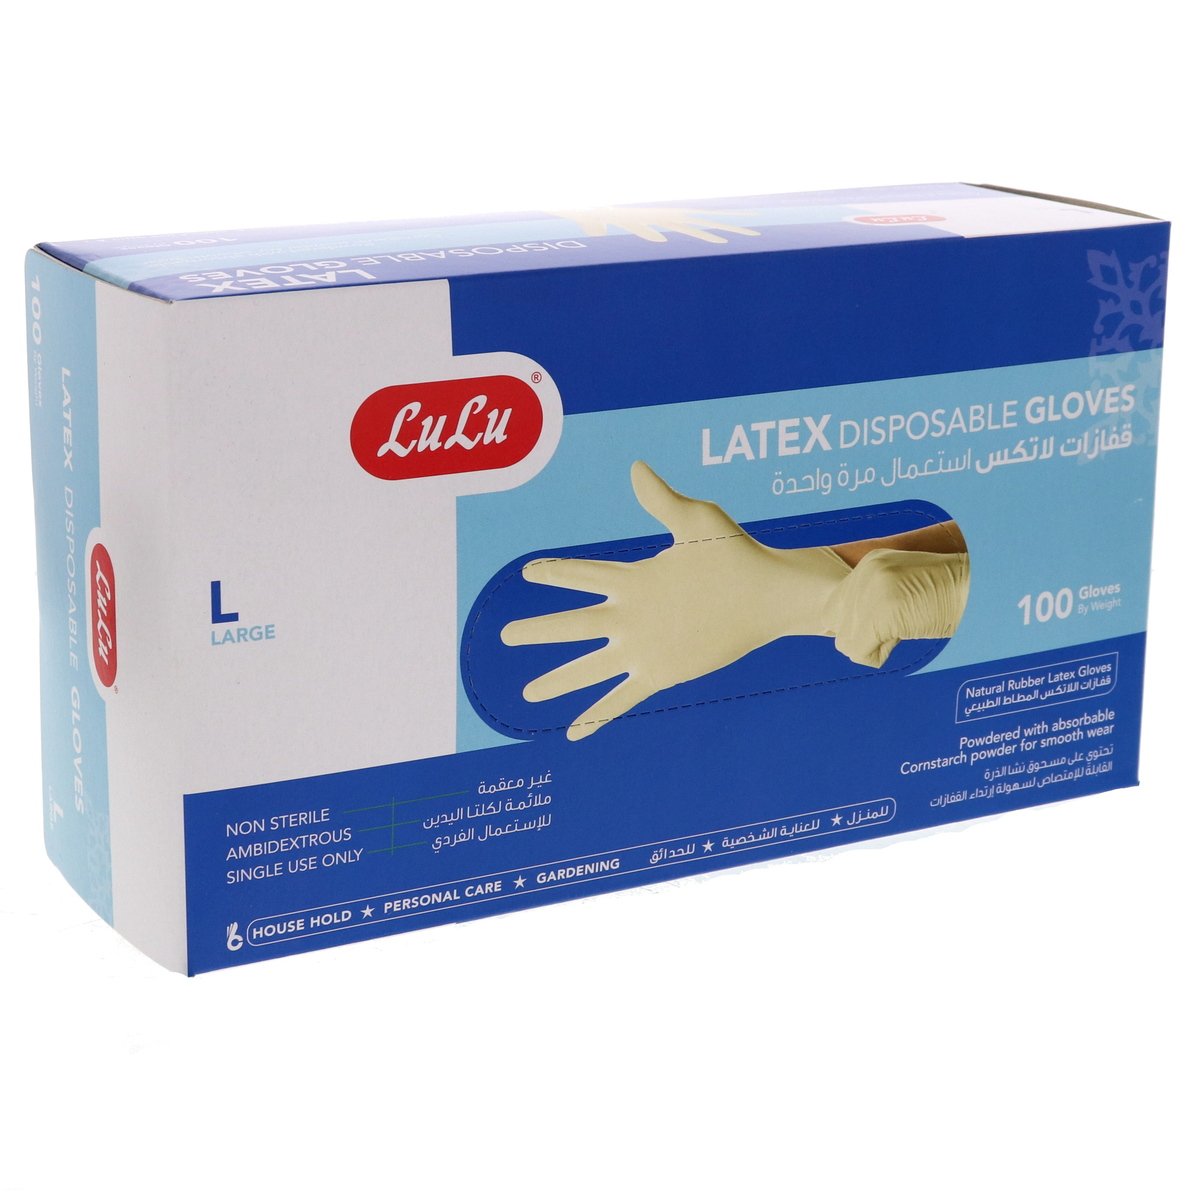 LuLu Latex Disposable Gloves Large 100pcs